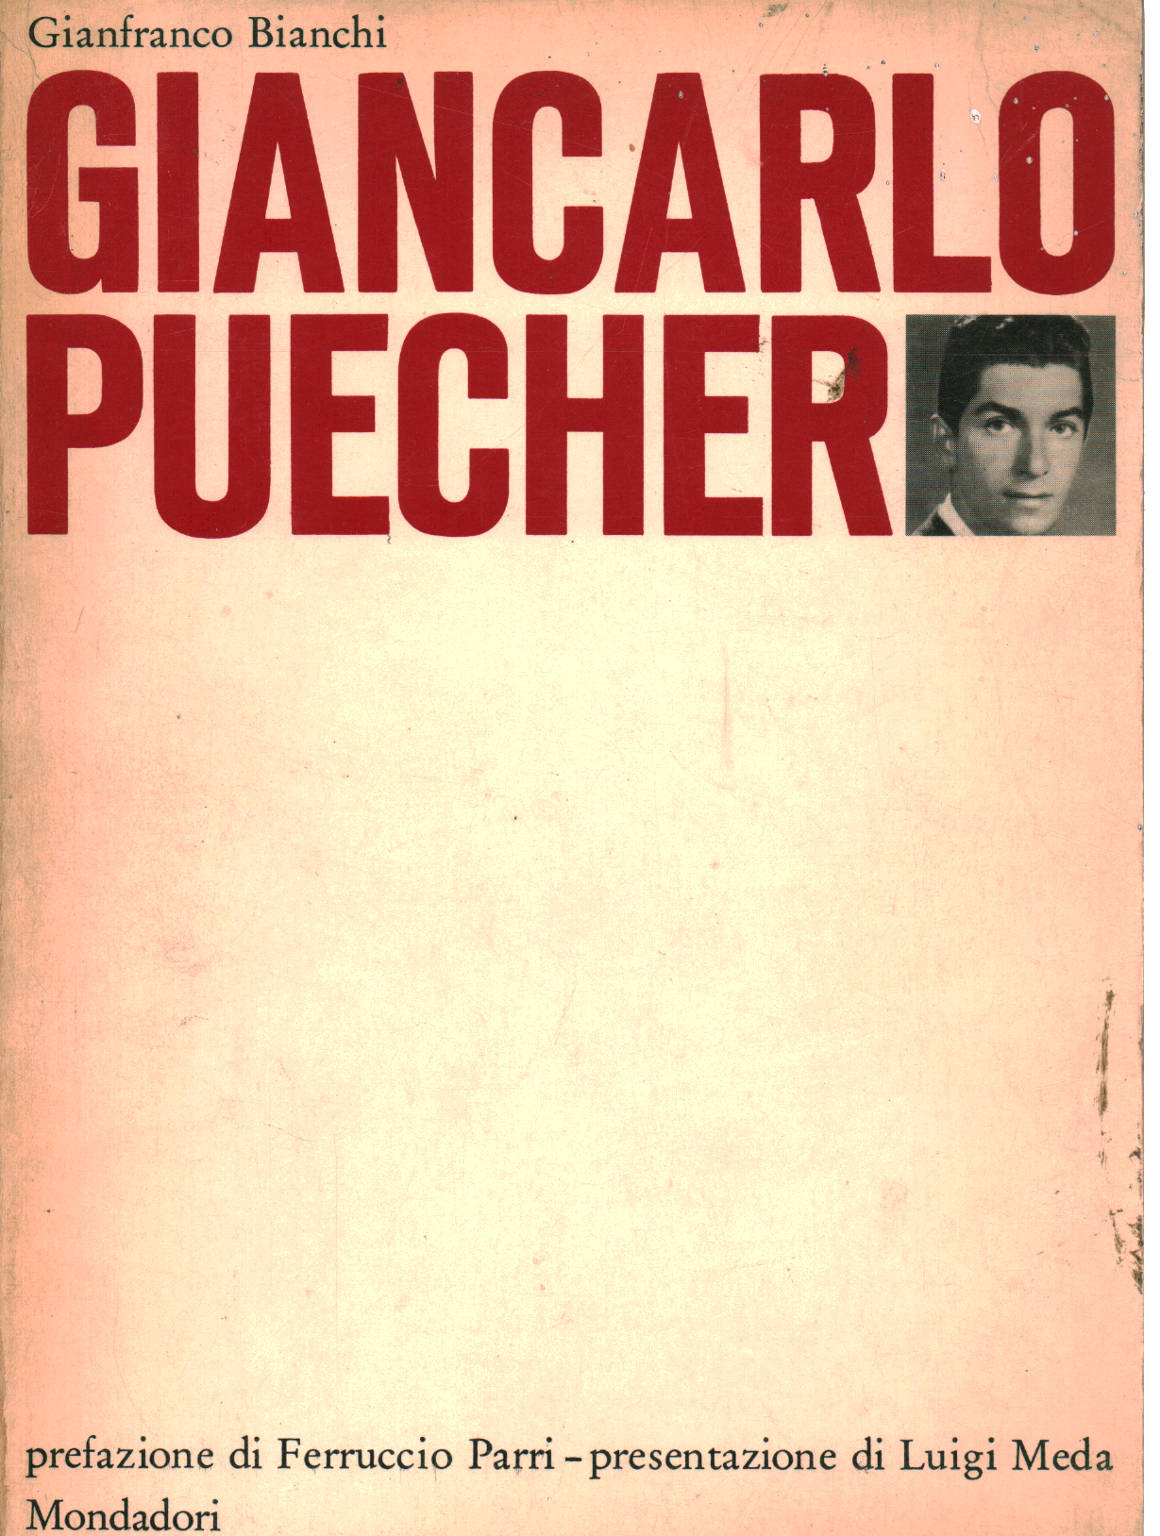 Giancarlo Pucher